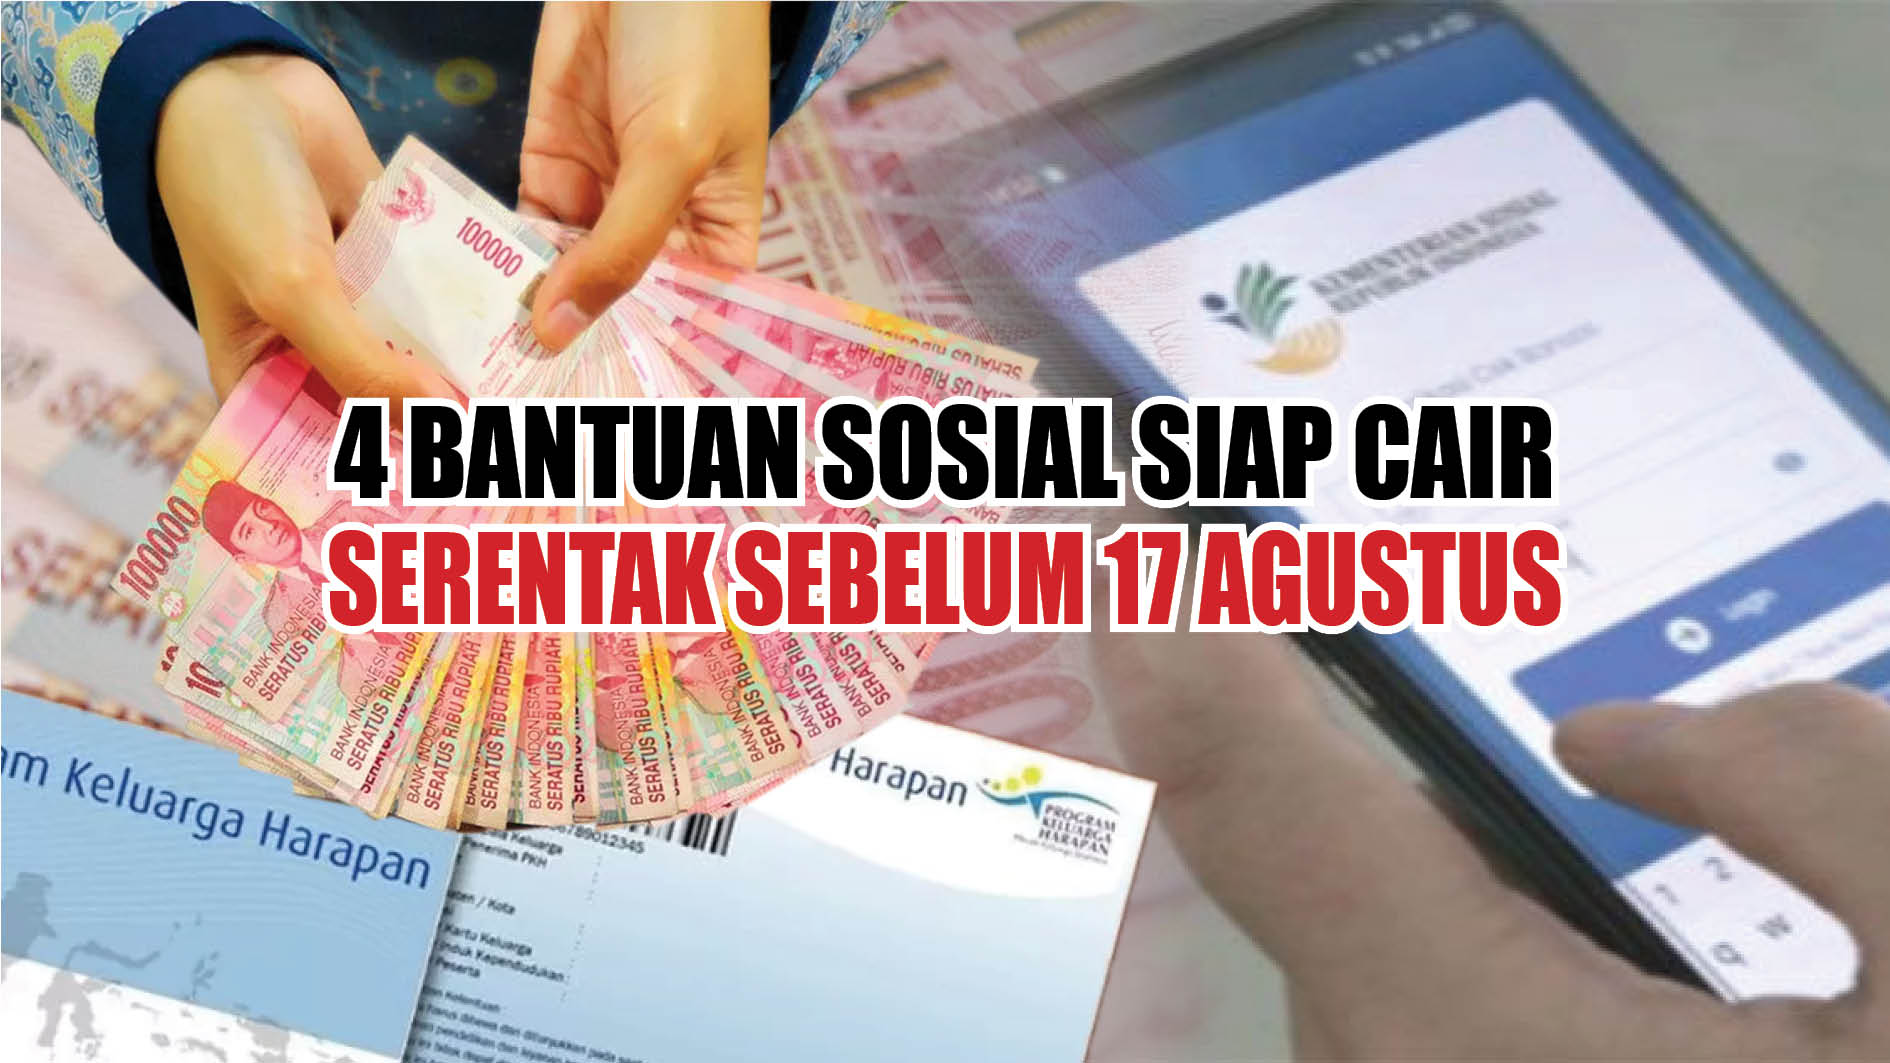 KPM Bersiap! 4 Bantuan Sosial Siap Cair Serentak Sebelum 17 Agustus, Jumlahnya Tidak Main-main